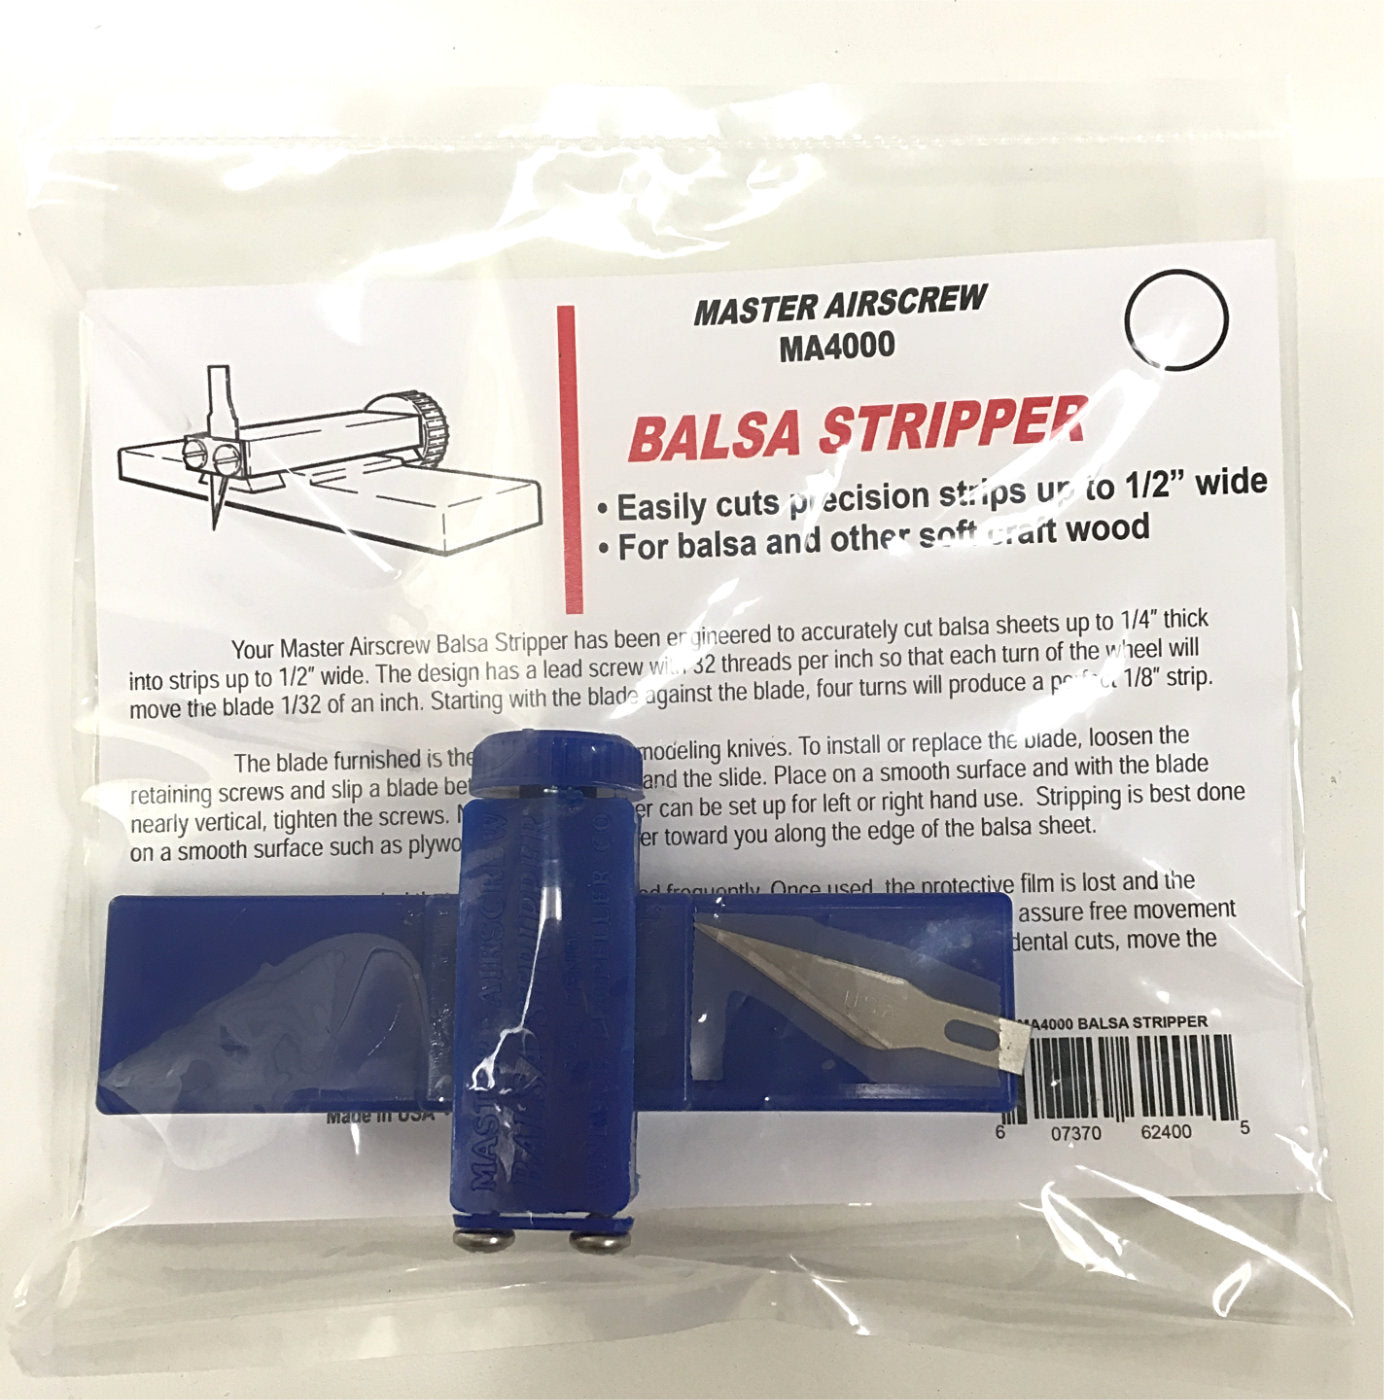 Balsa Stripper - Master Airscrew